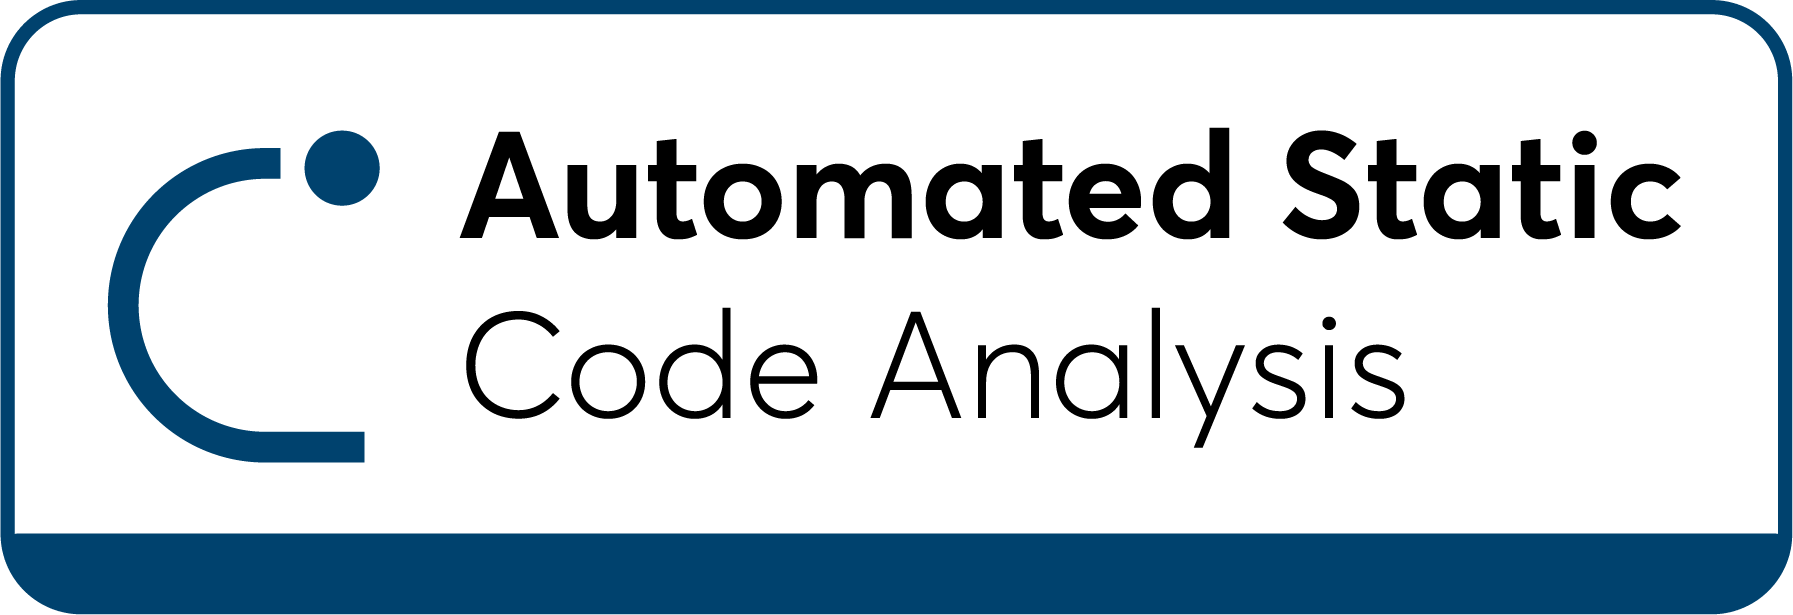 AutomatedStaticCodeAnalysis